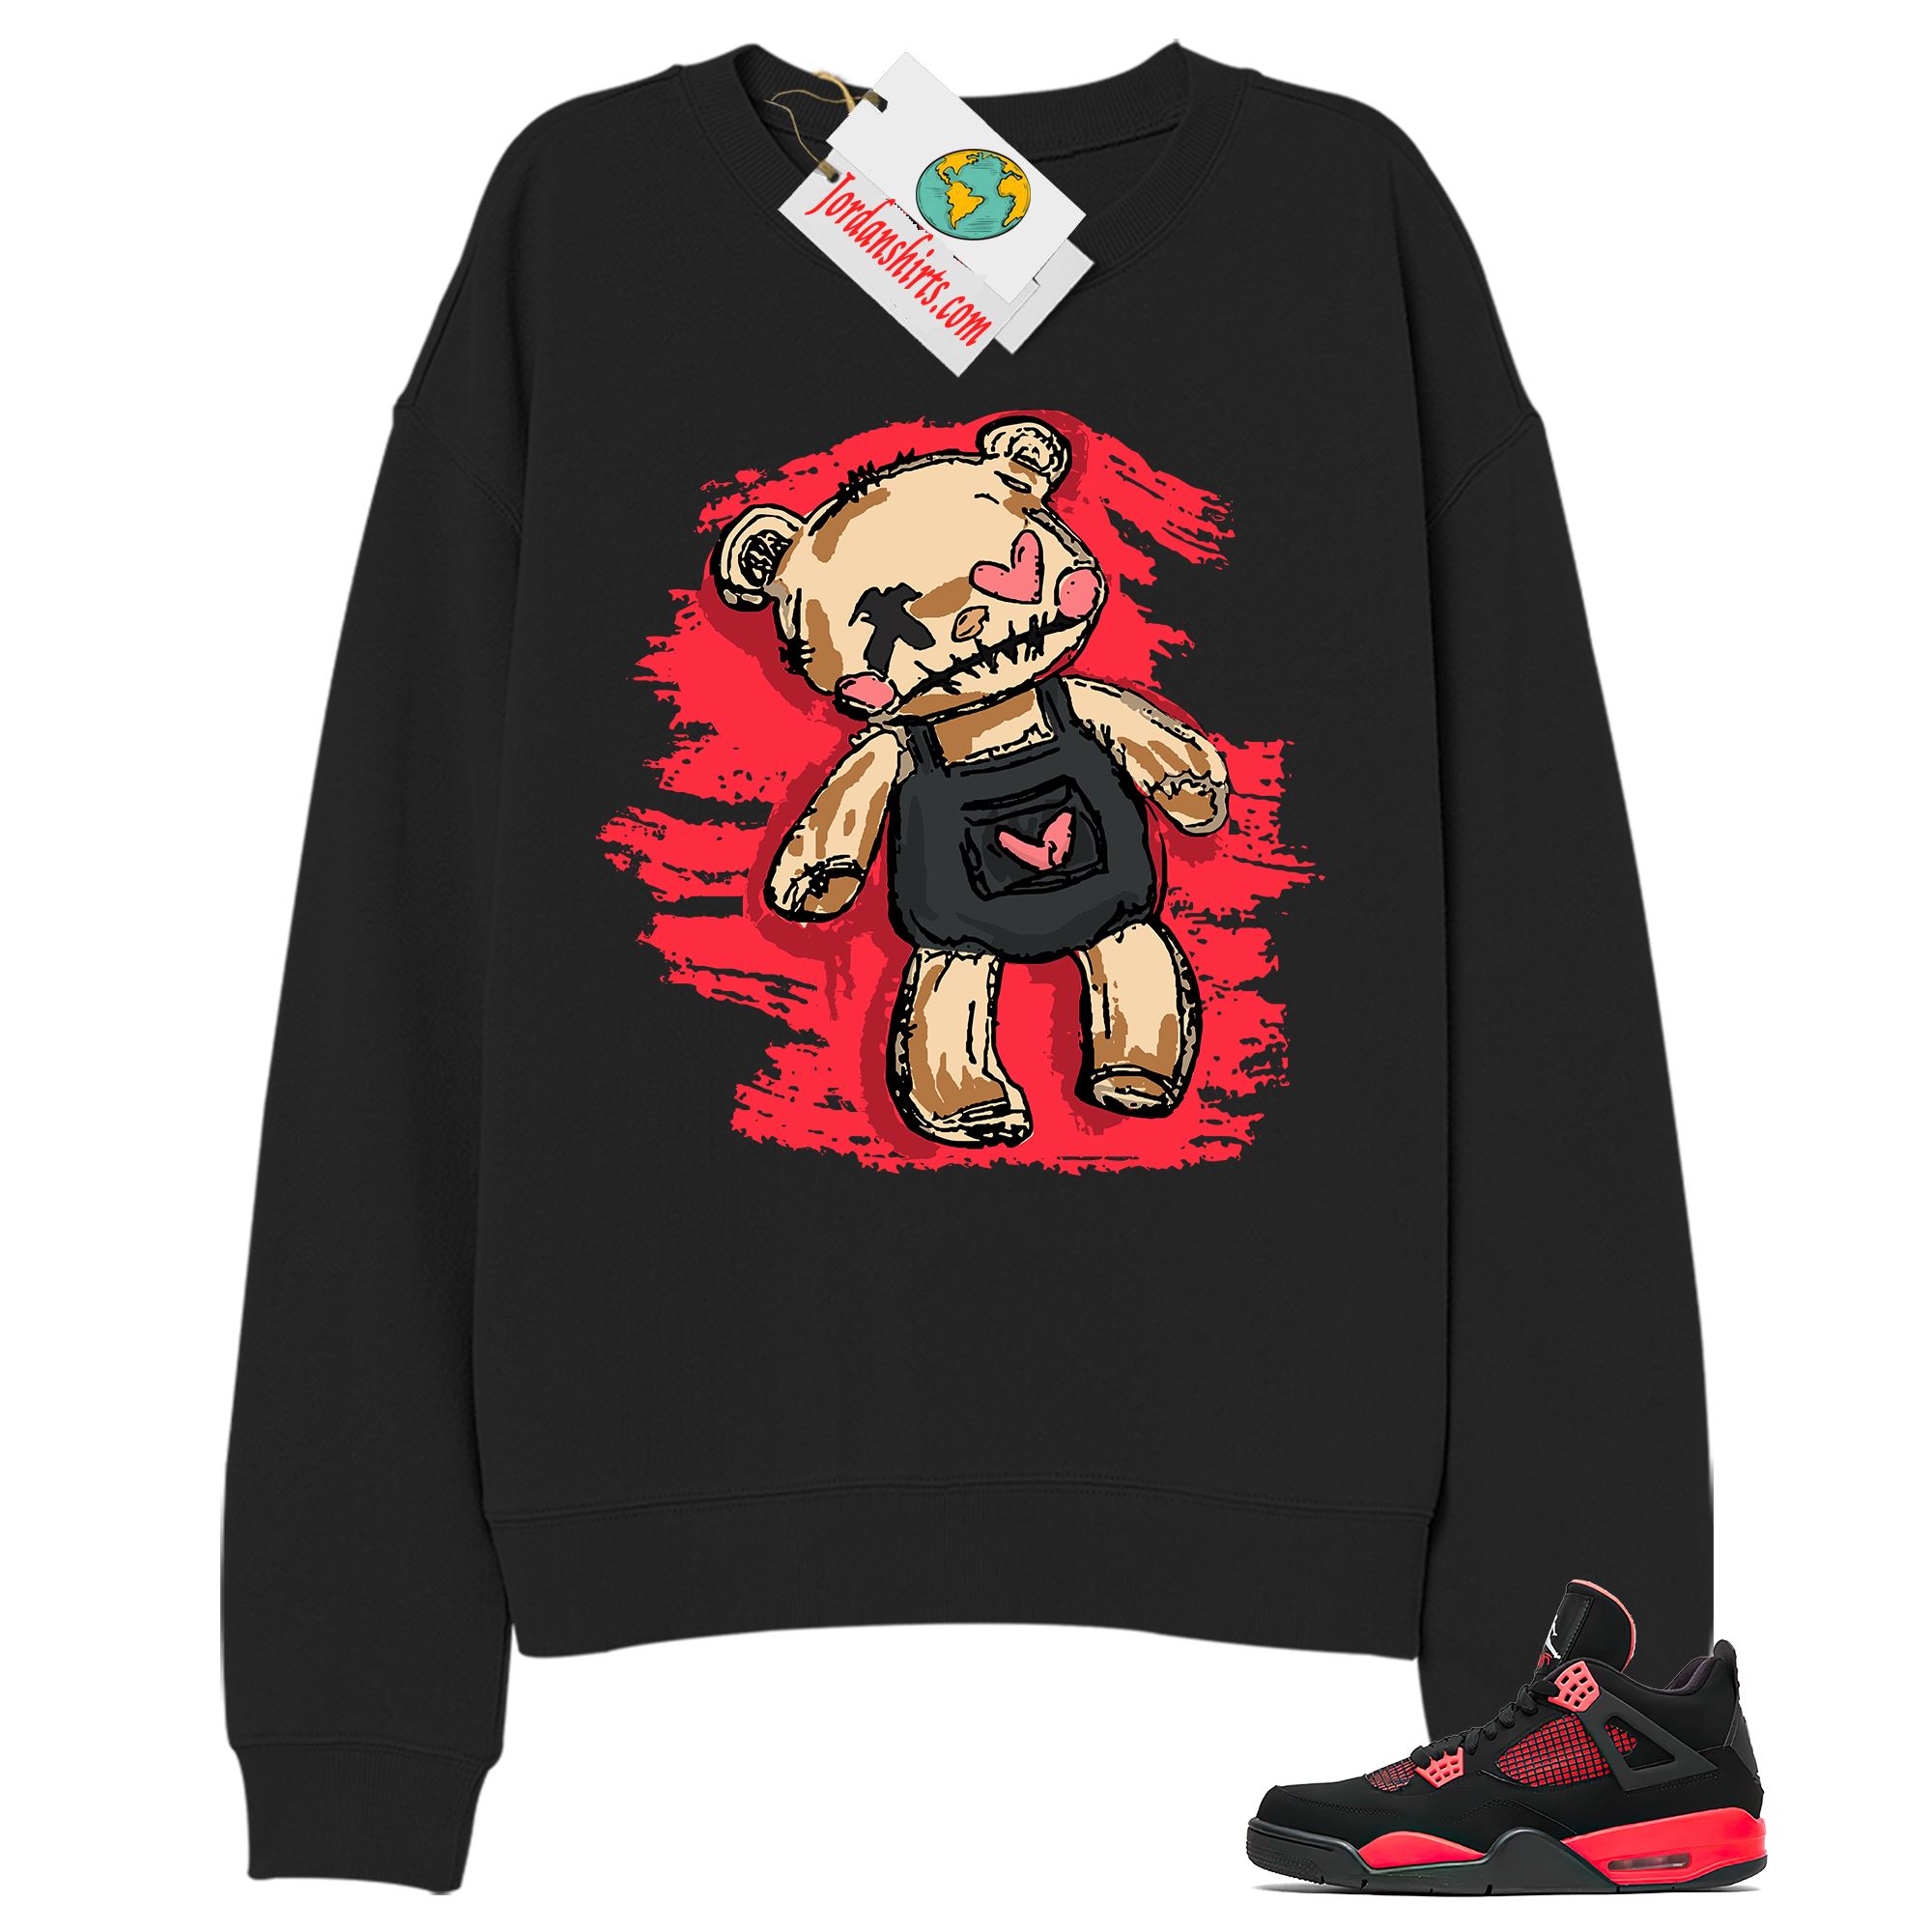 Jordan 4 Sweatshirt, Teddy Bear Broken Heart Black Sweatshirt Air Jordan 4 Red Thunder 4s Plus Size Up To 5xl